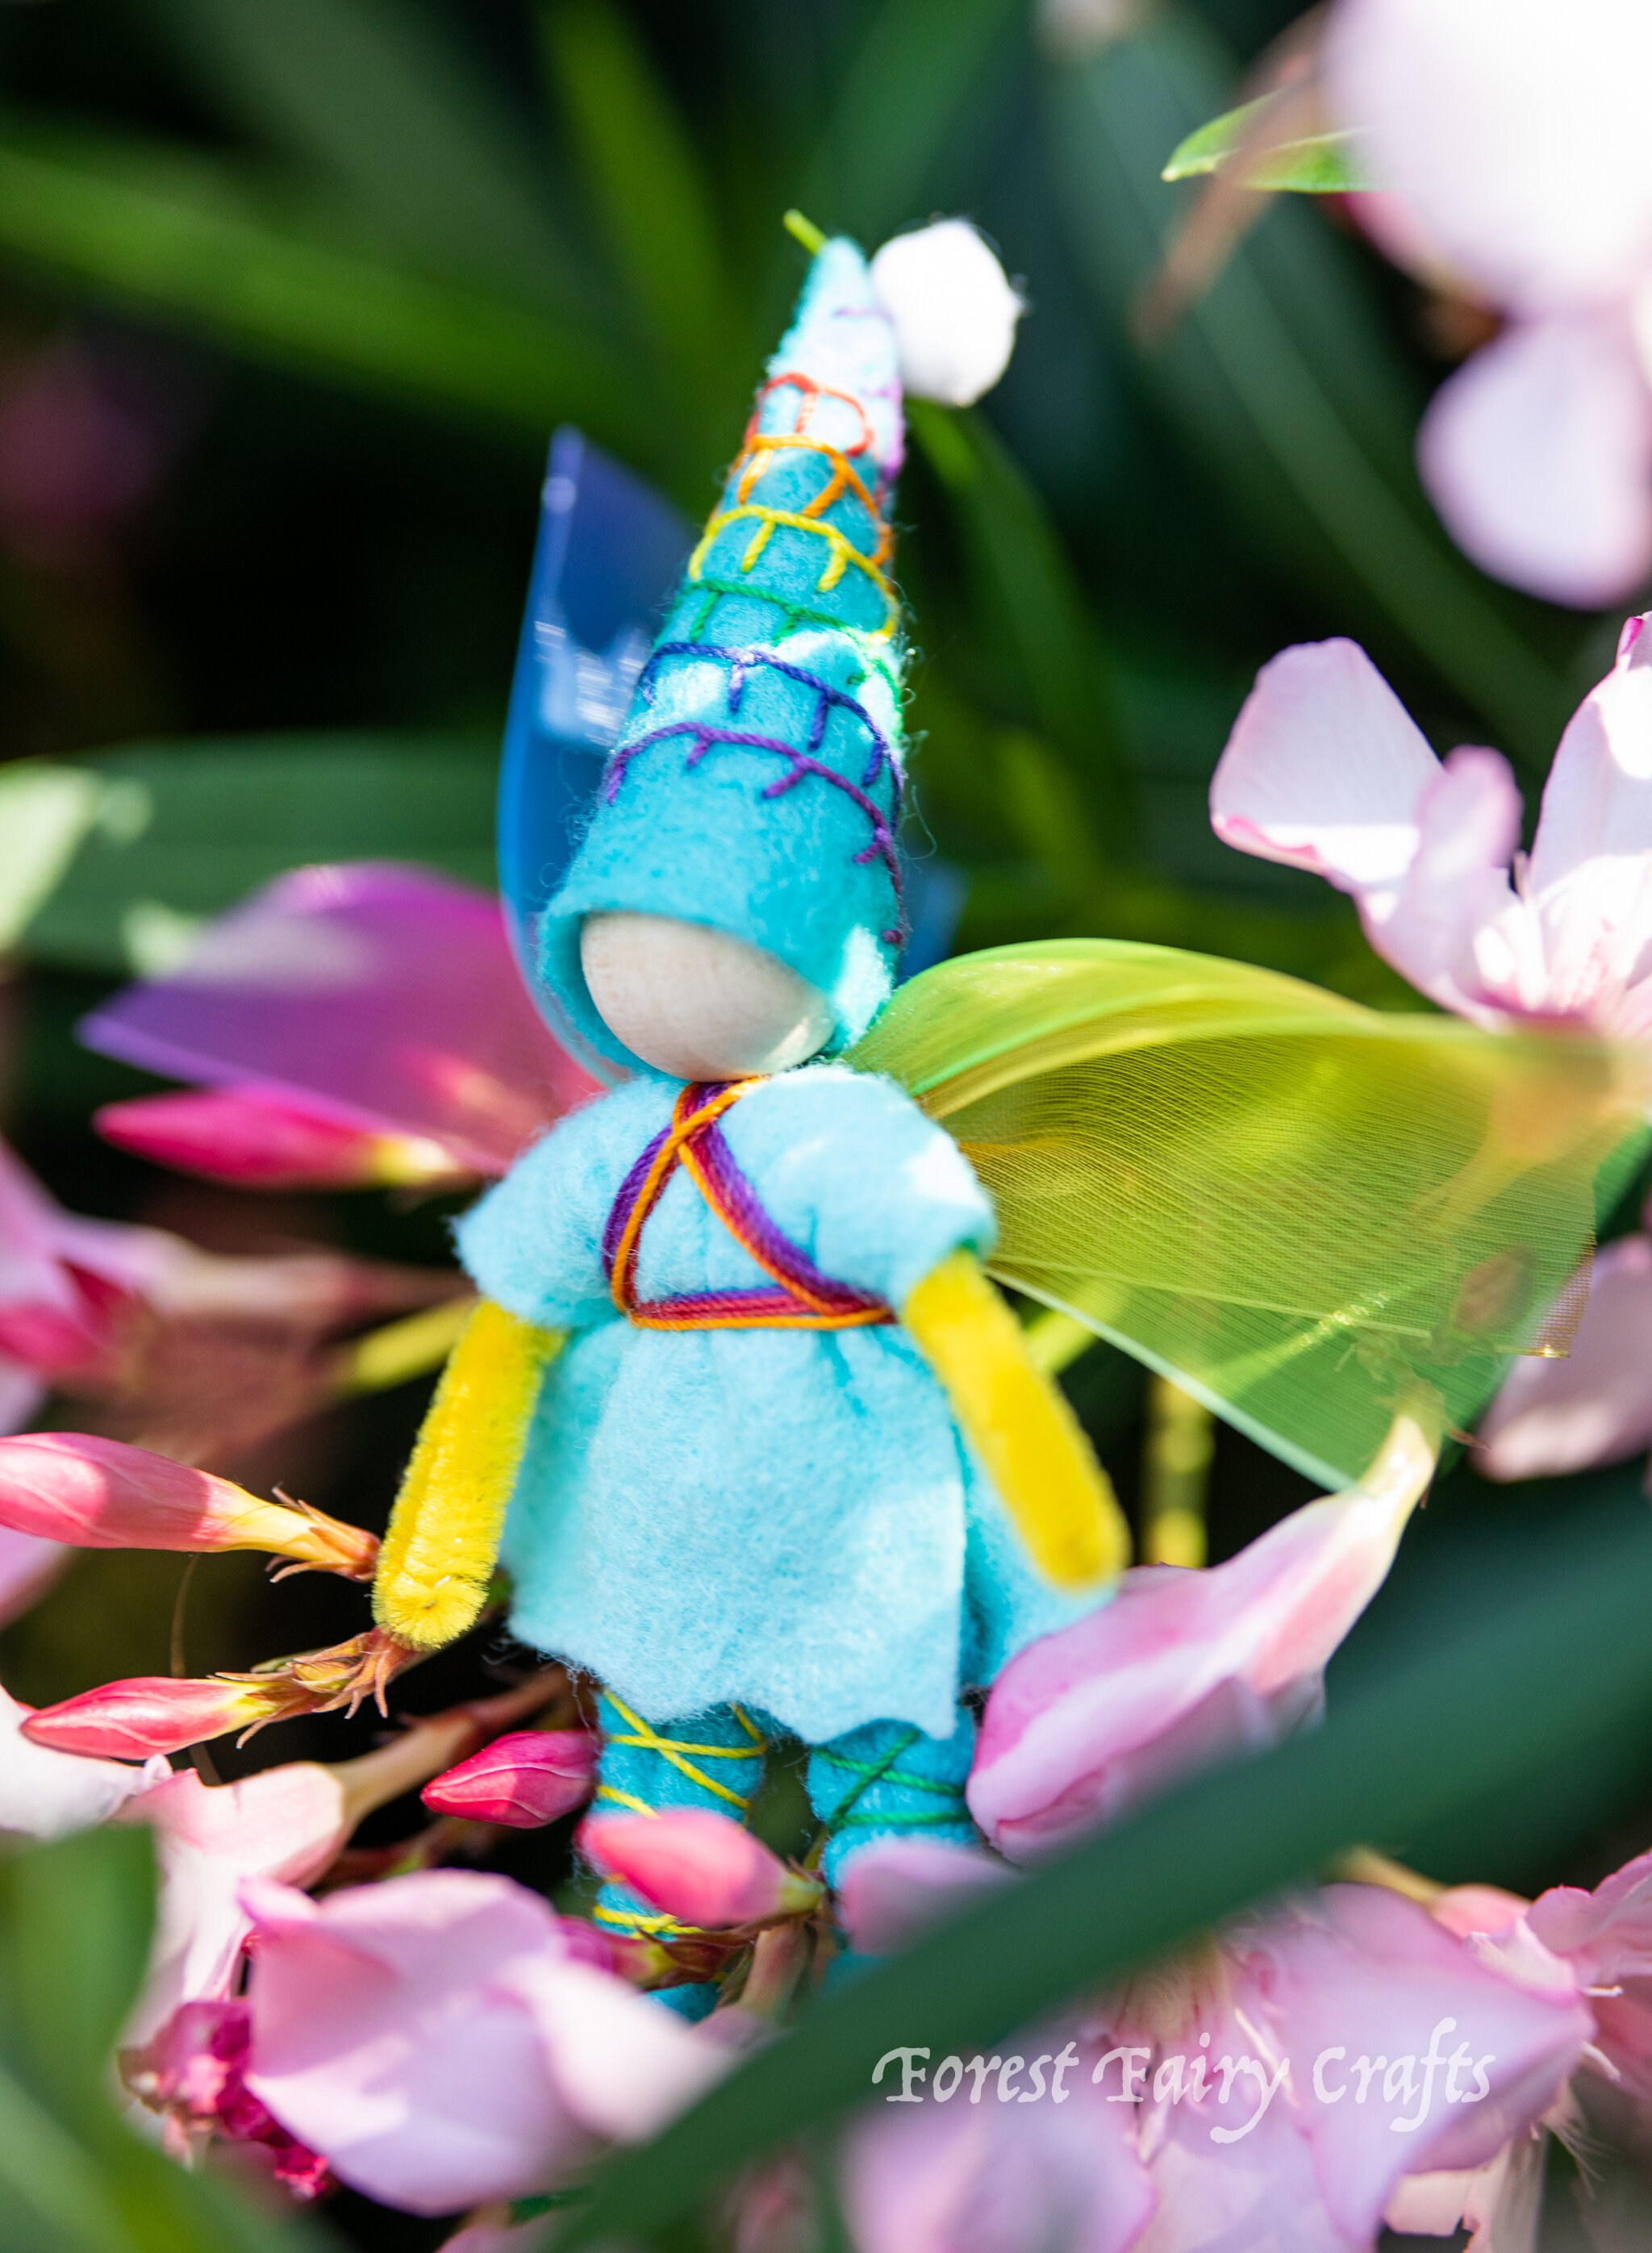 Rainbow Fairies by Forest Fairy Crafts made by Lenka Vodicka